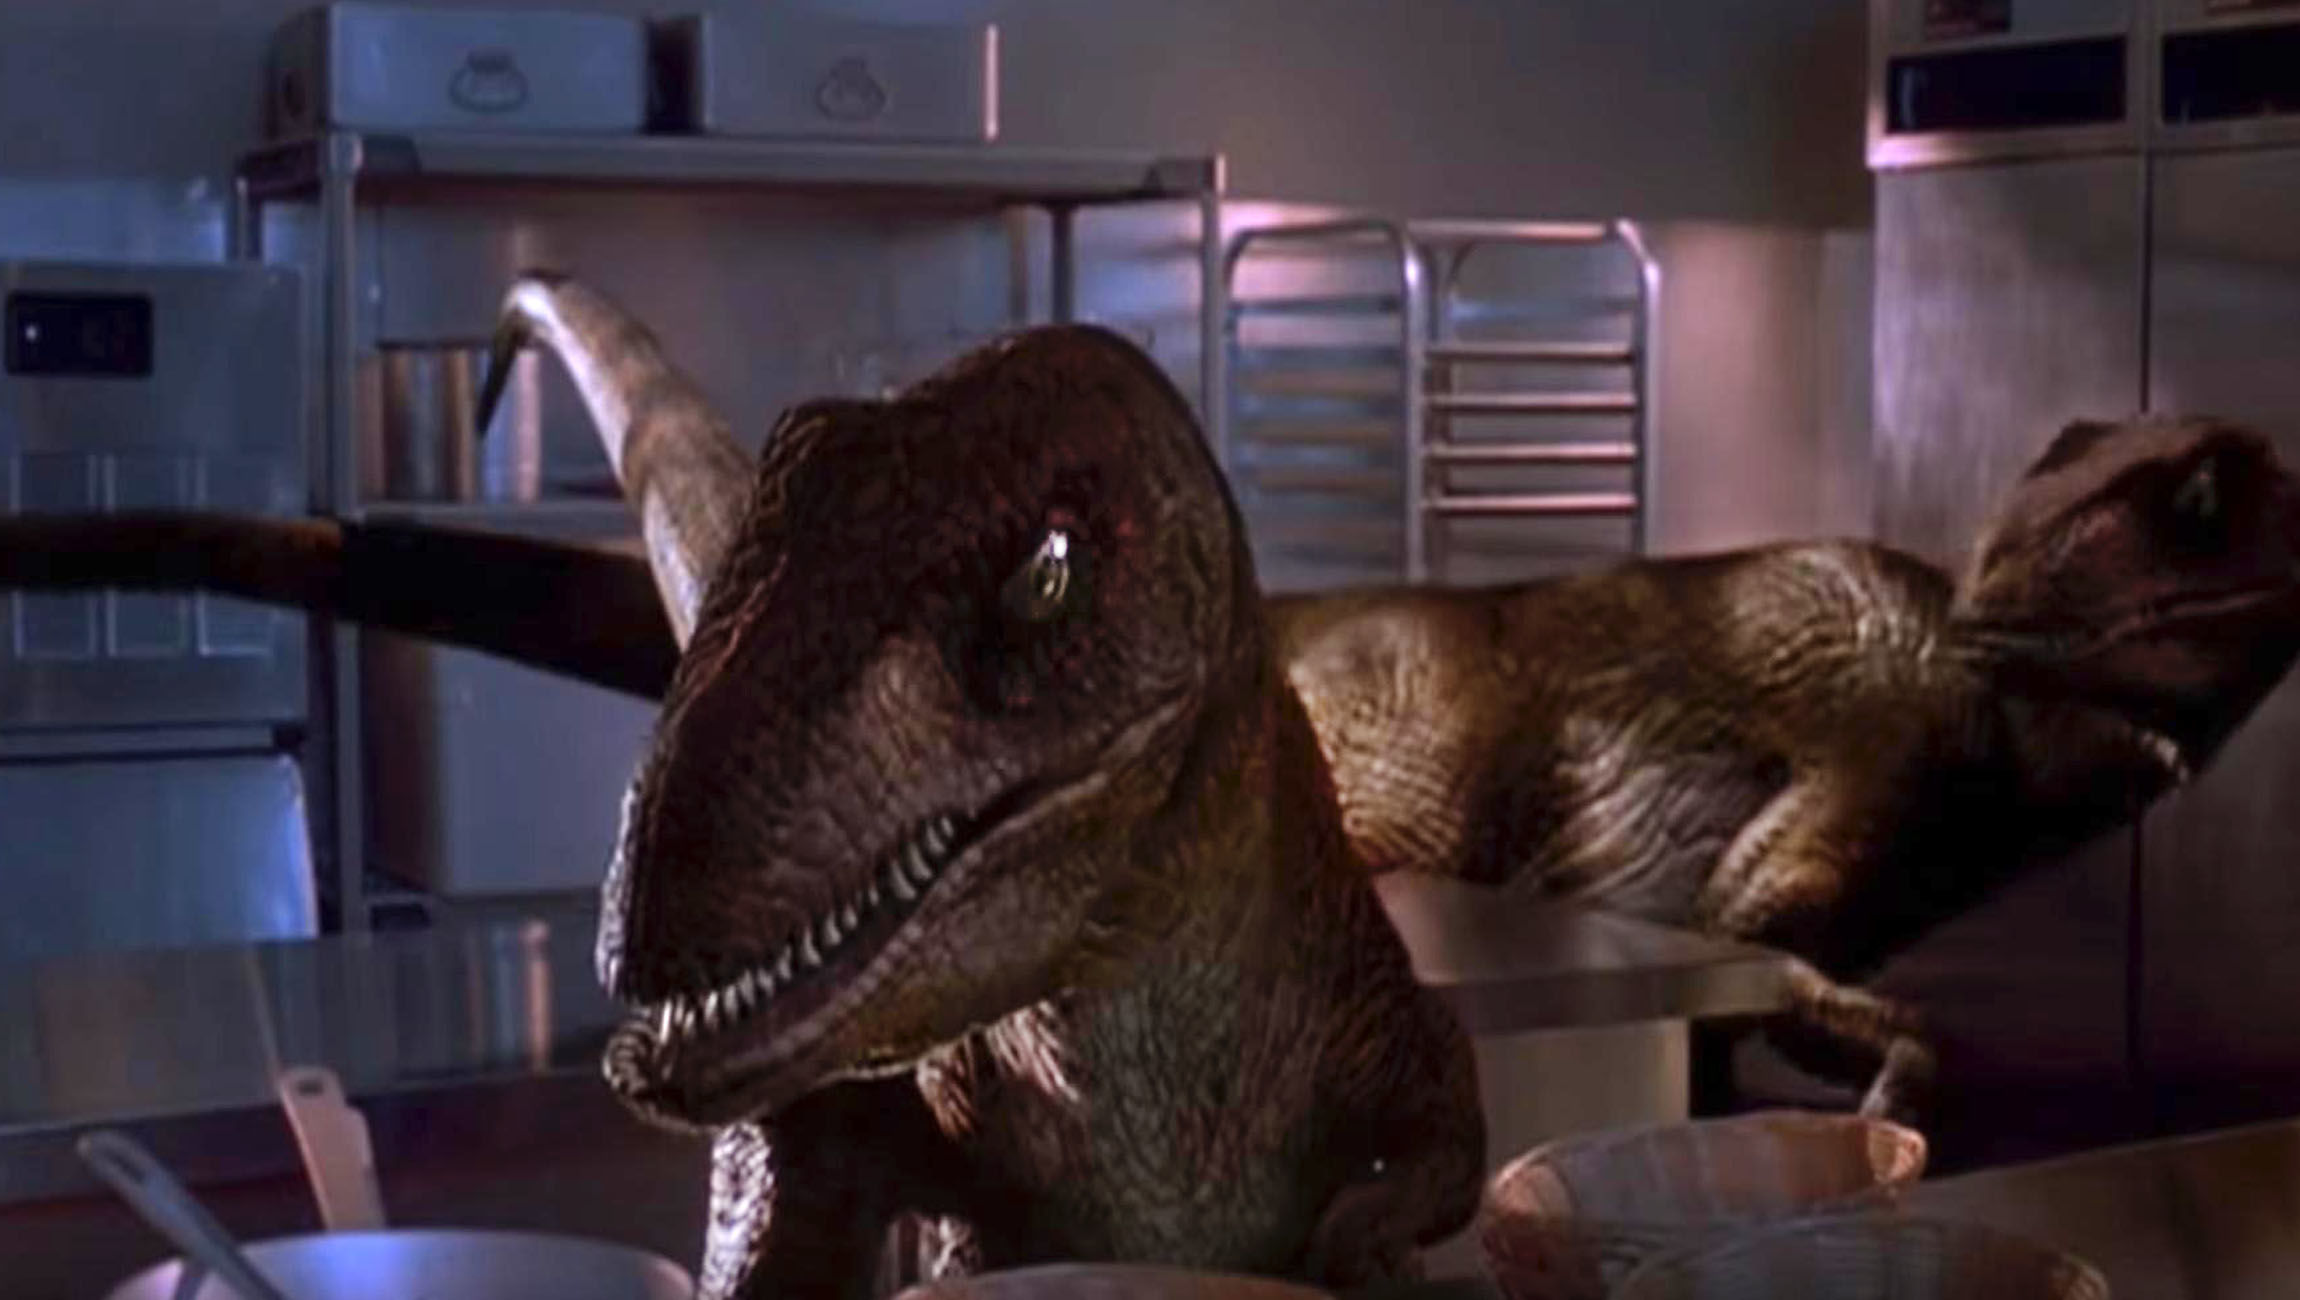 Don't believe Jurassic Park, because raptors didn't hunt in packs